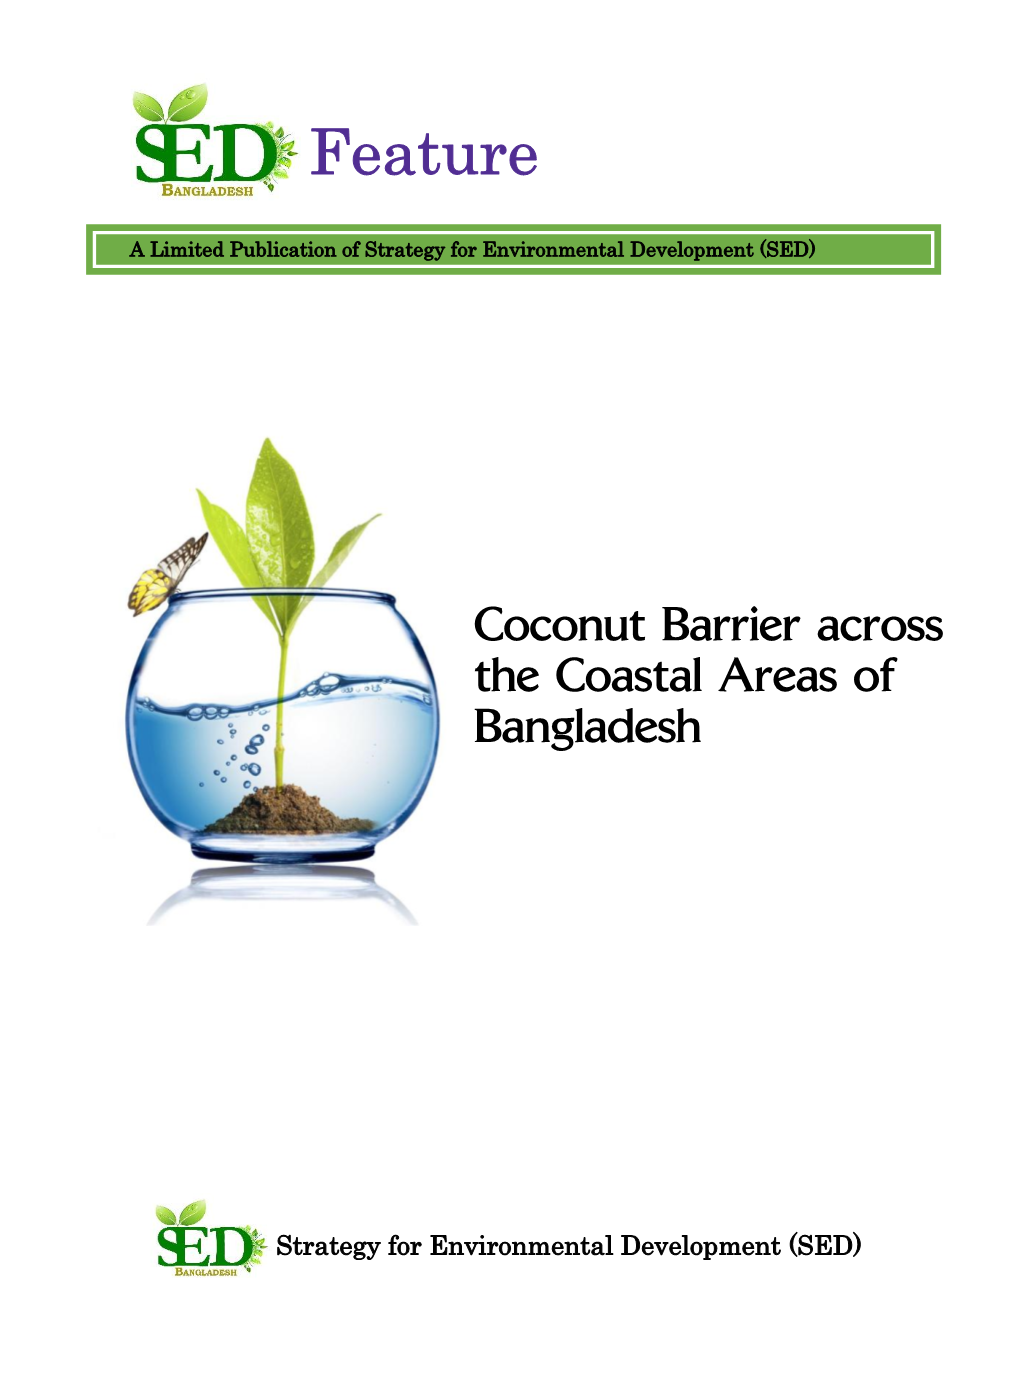 Coconut Barrier Across the Coastal Areas of Bangladesh